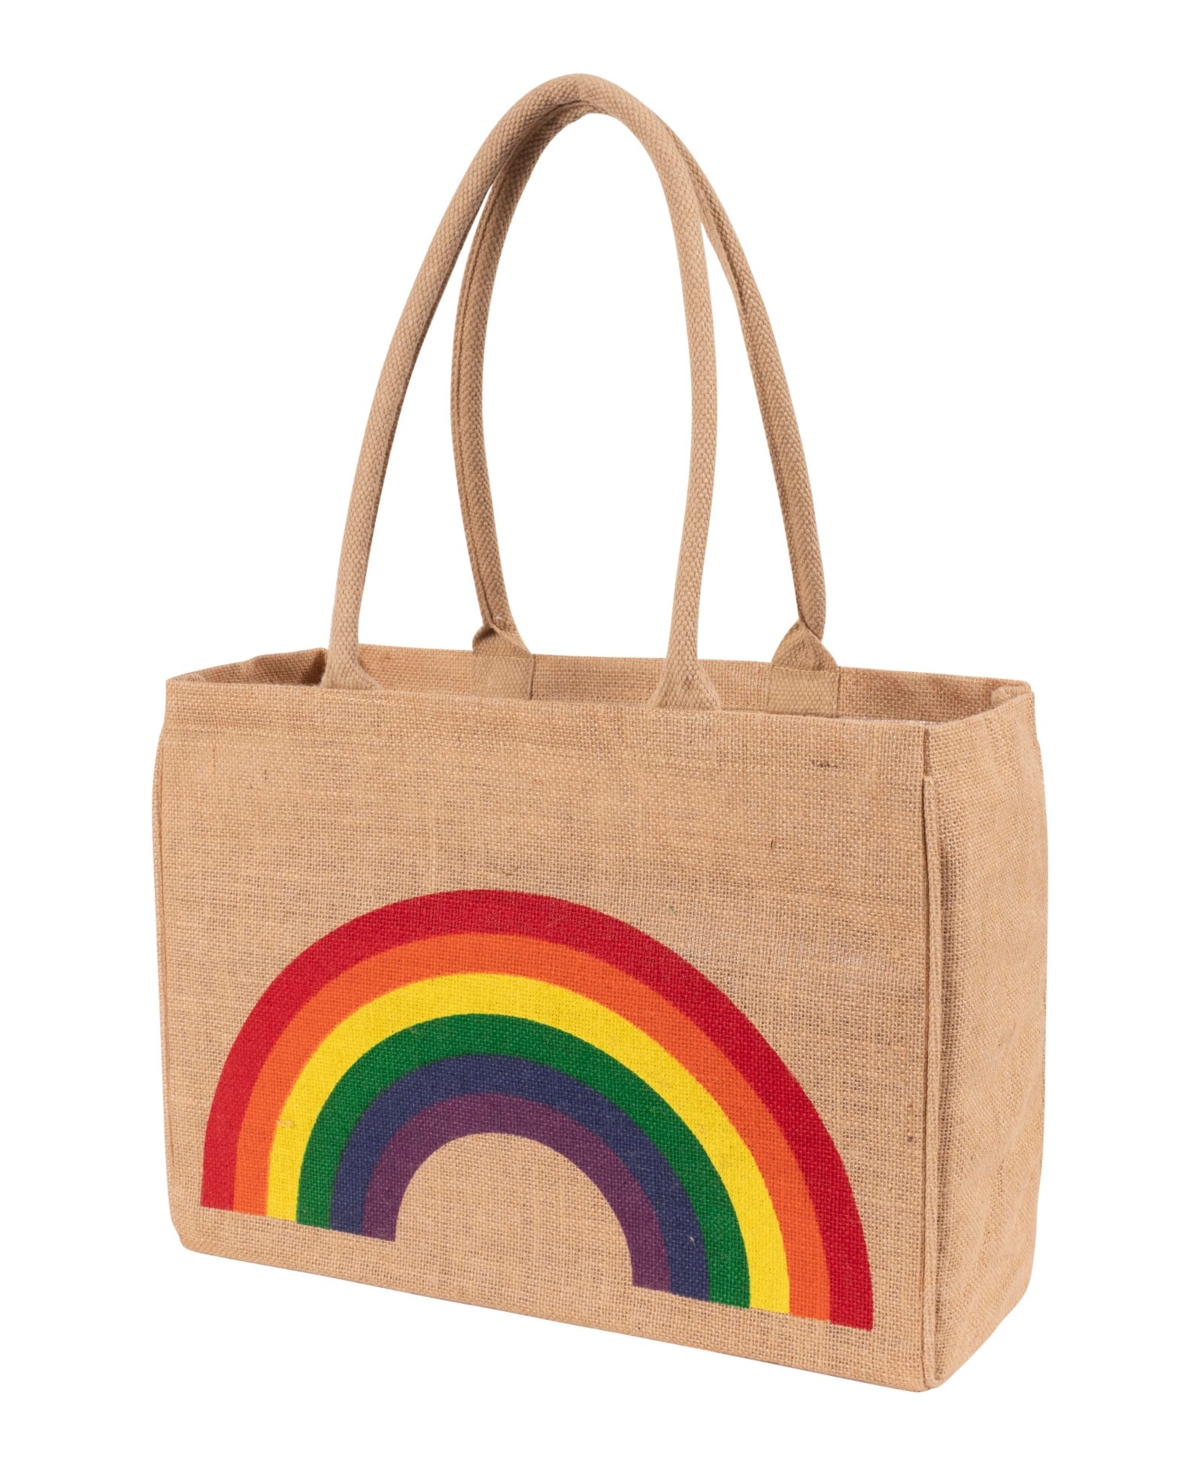 Jute Market Tote Bag with Rainbow Print - Beige